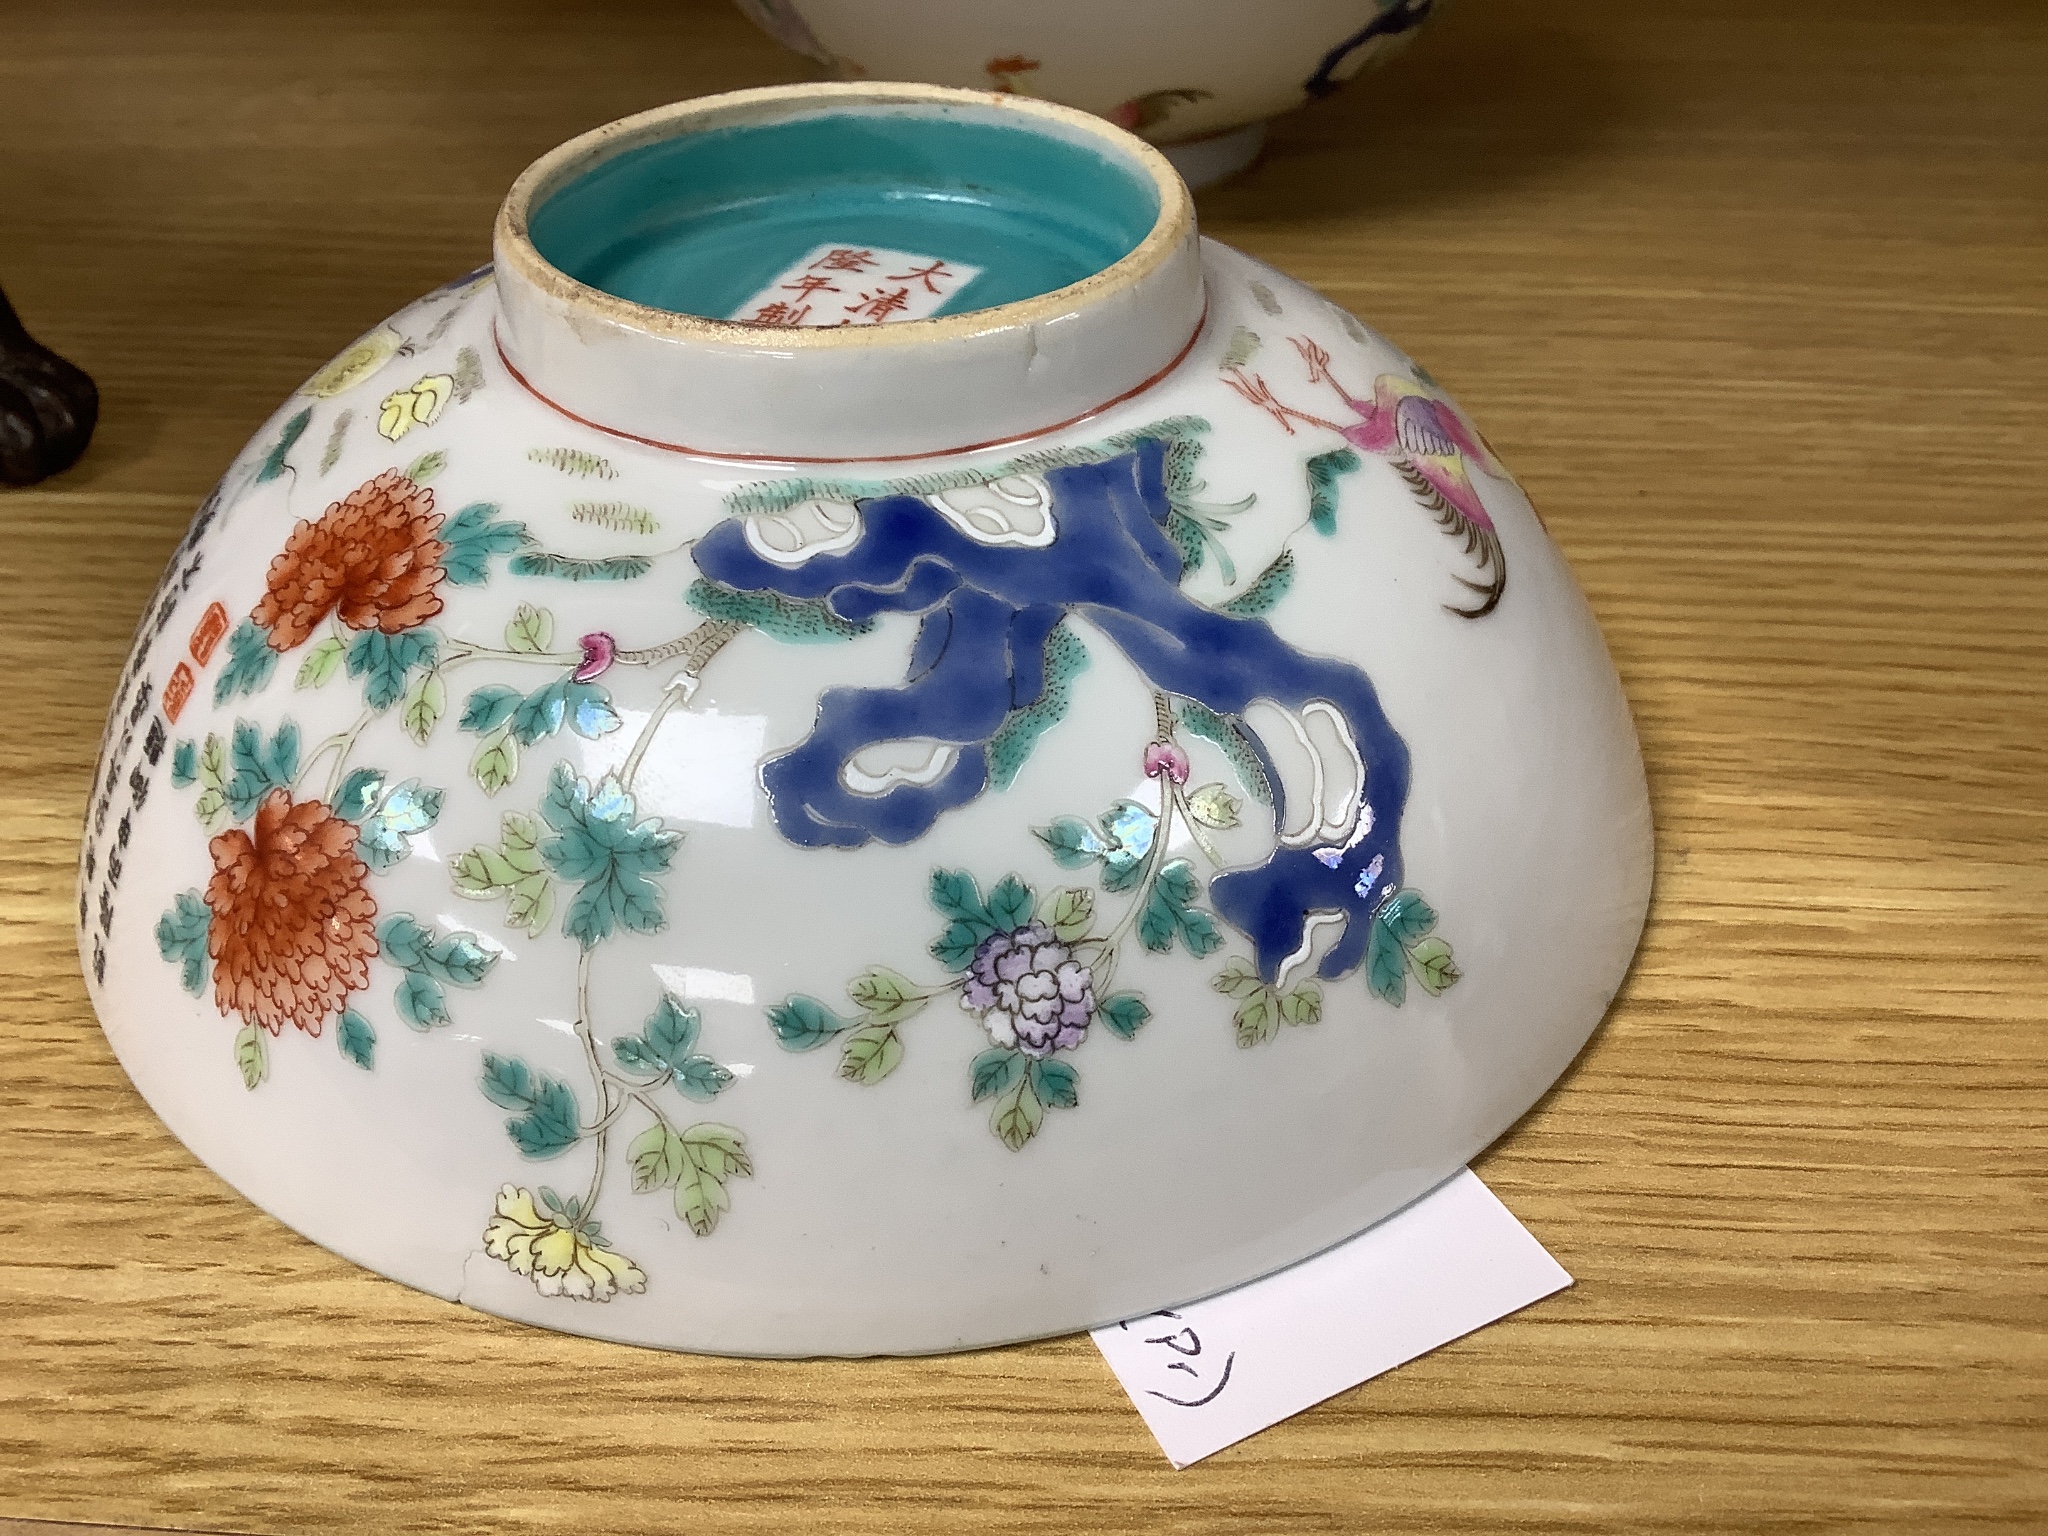 A pair of Chinese porcelain enamelled bowls, diameter 16cm